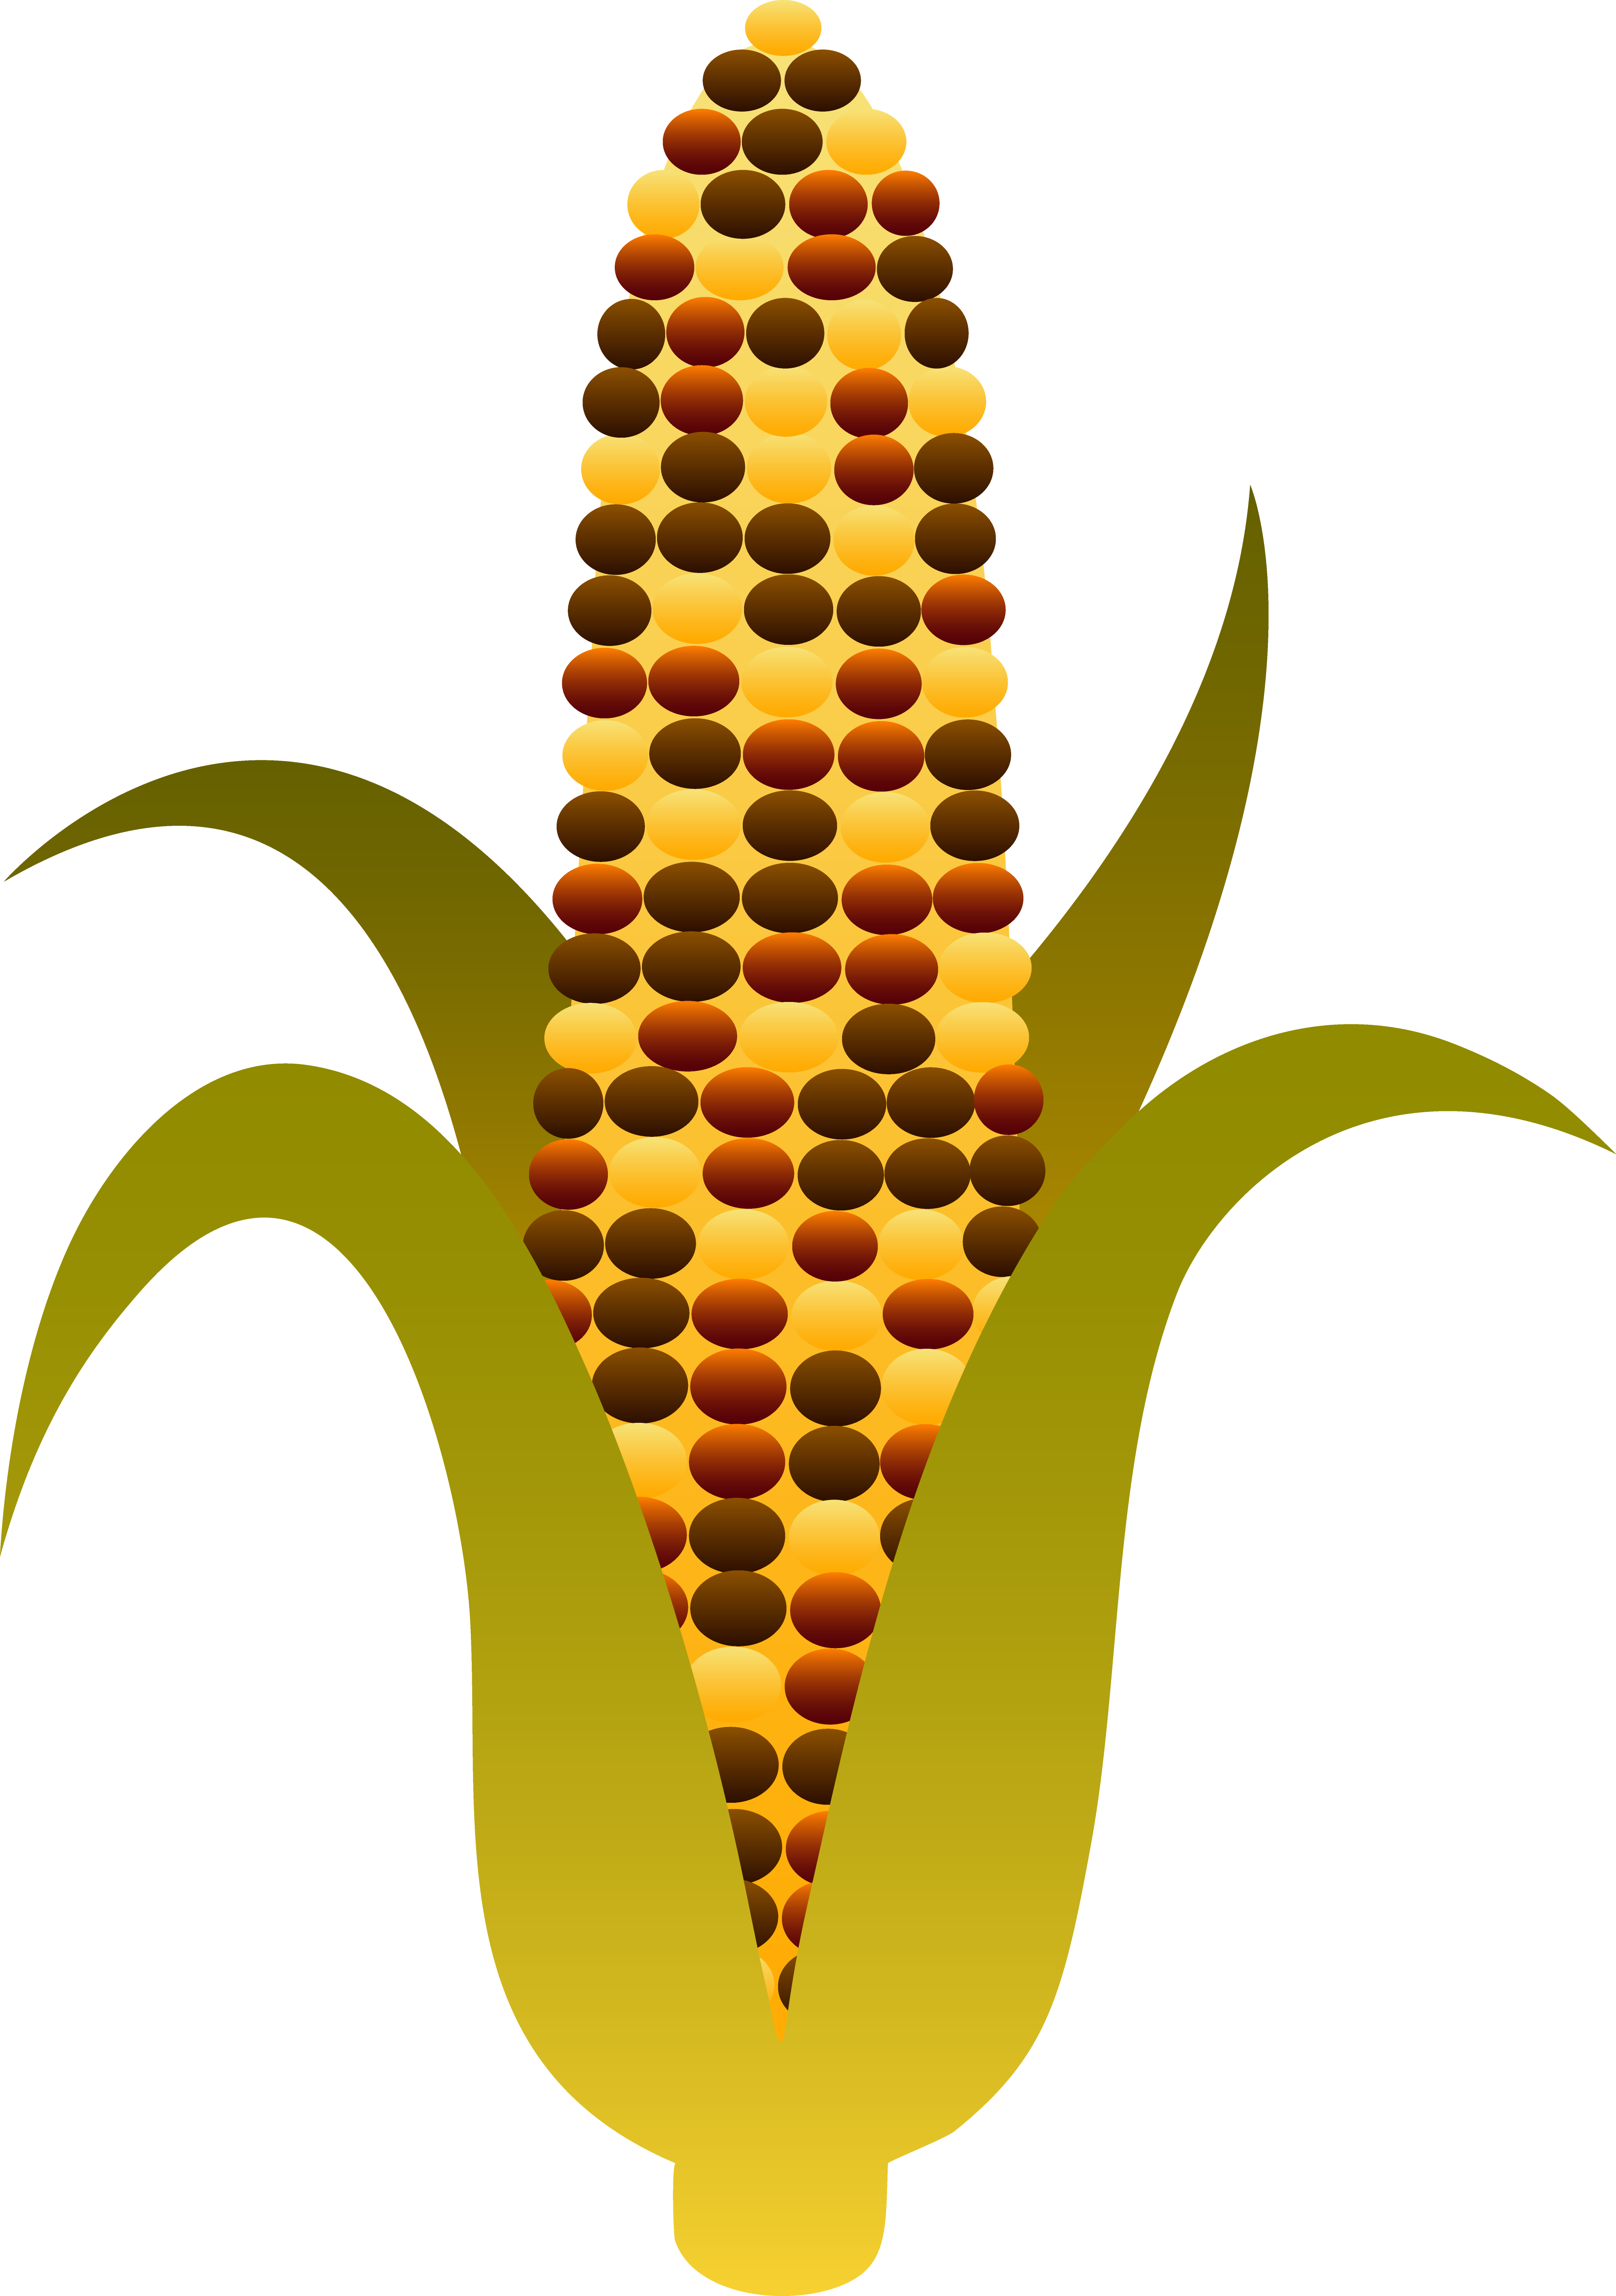 Indian Harvest Corn Maize - Free Clip Art